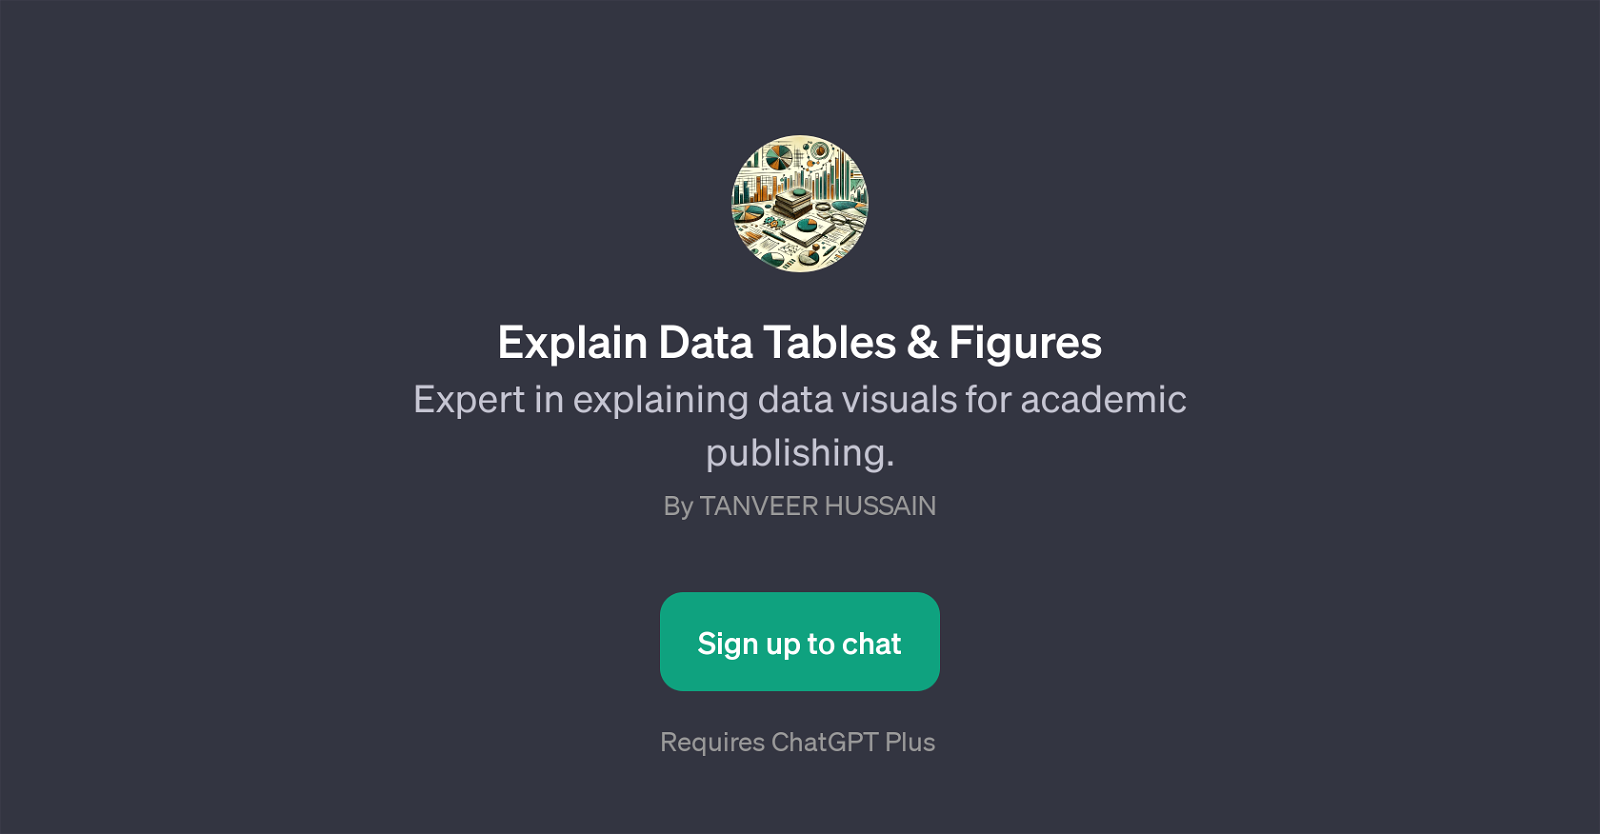 Explain Data Tables & Figures website